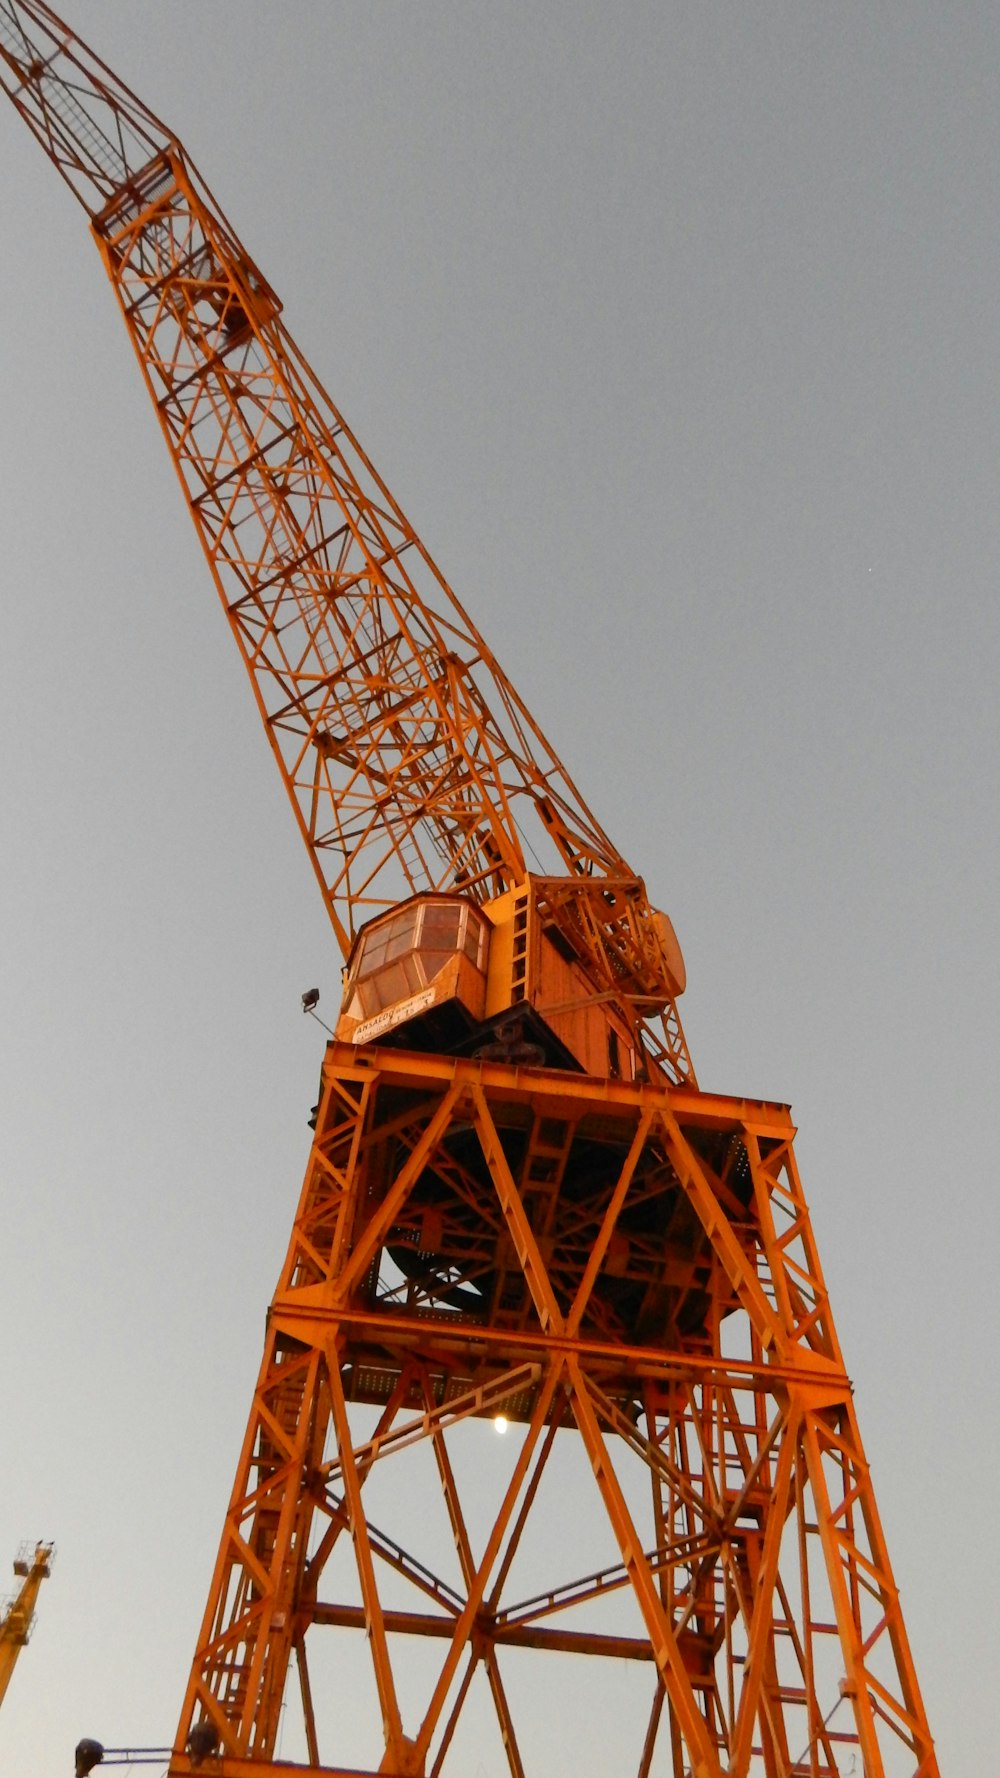 orange crane under blue sky